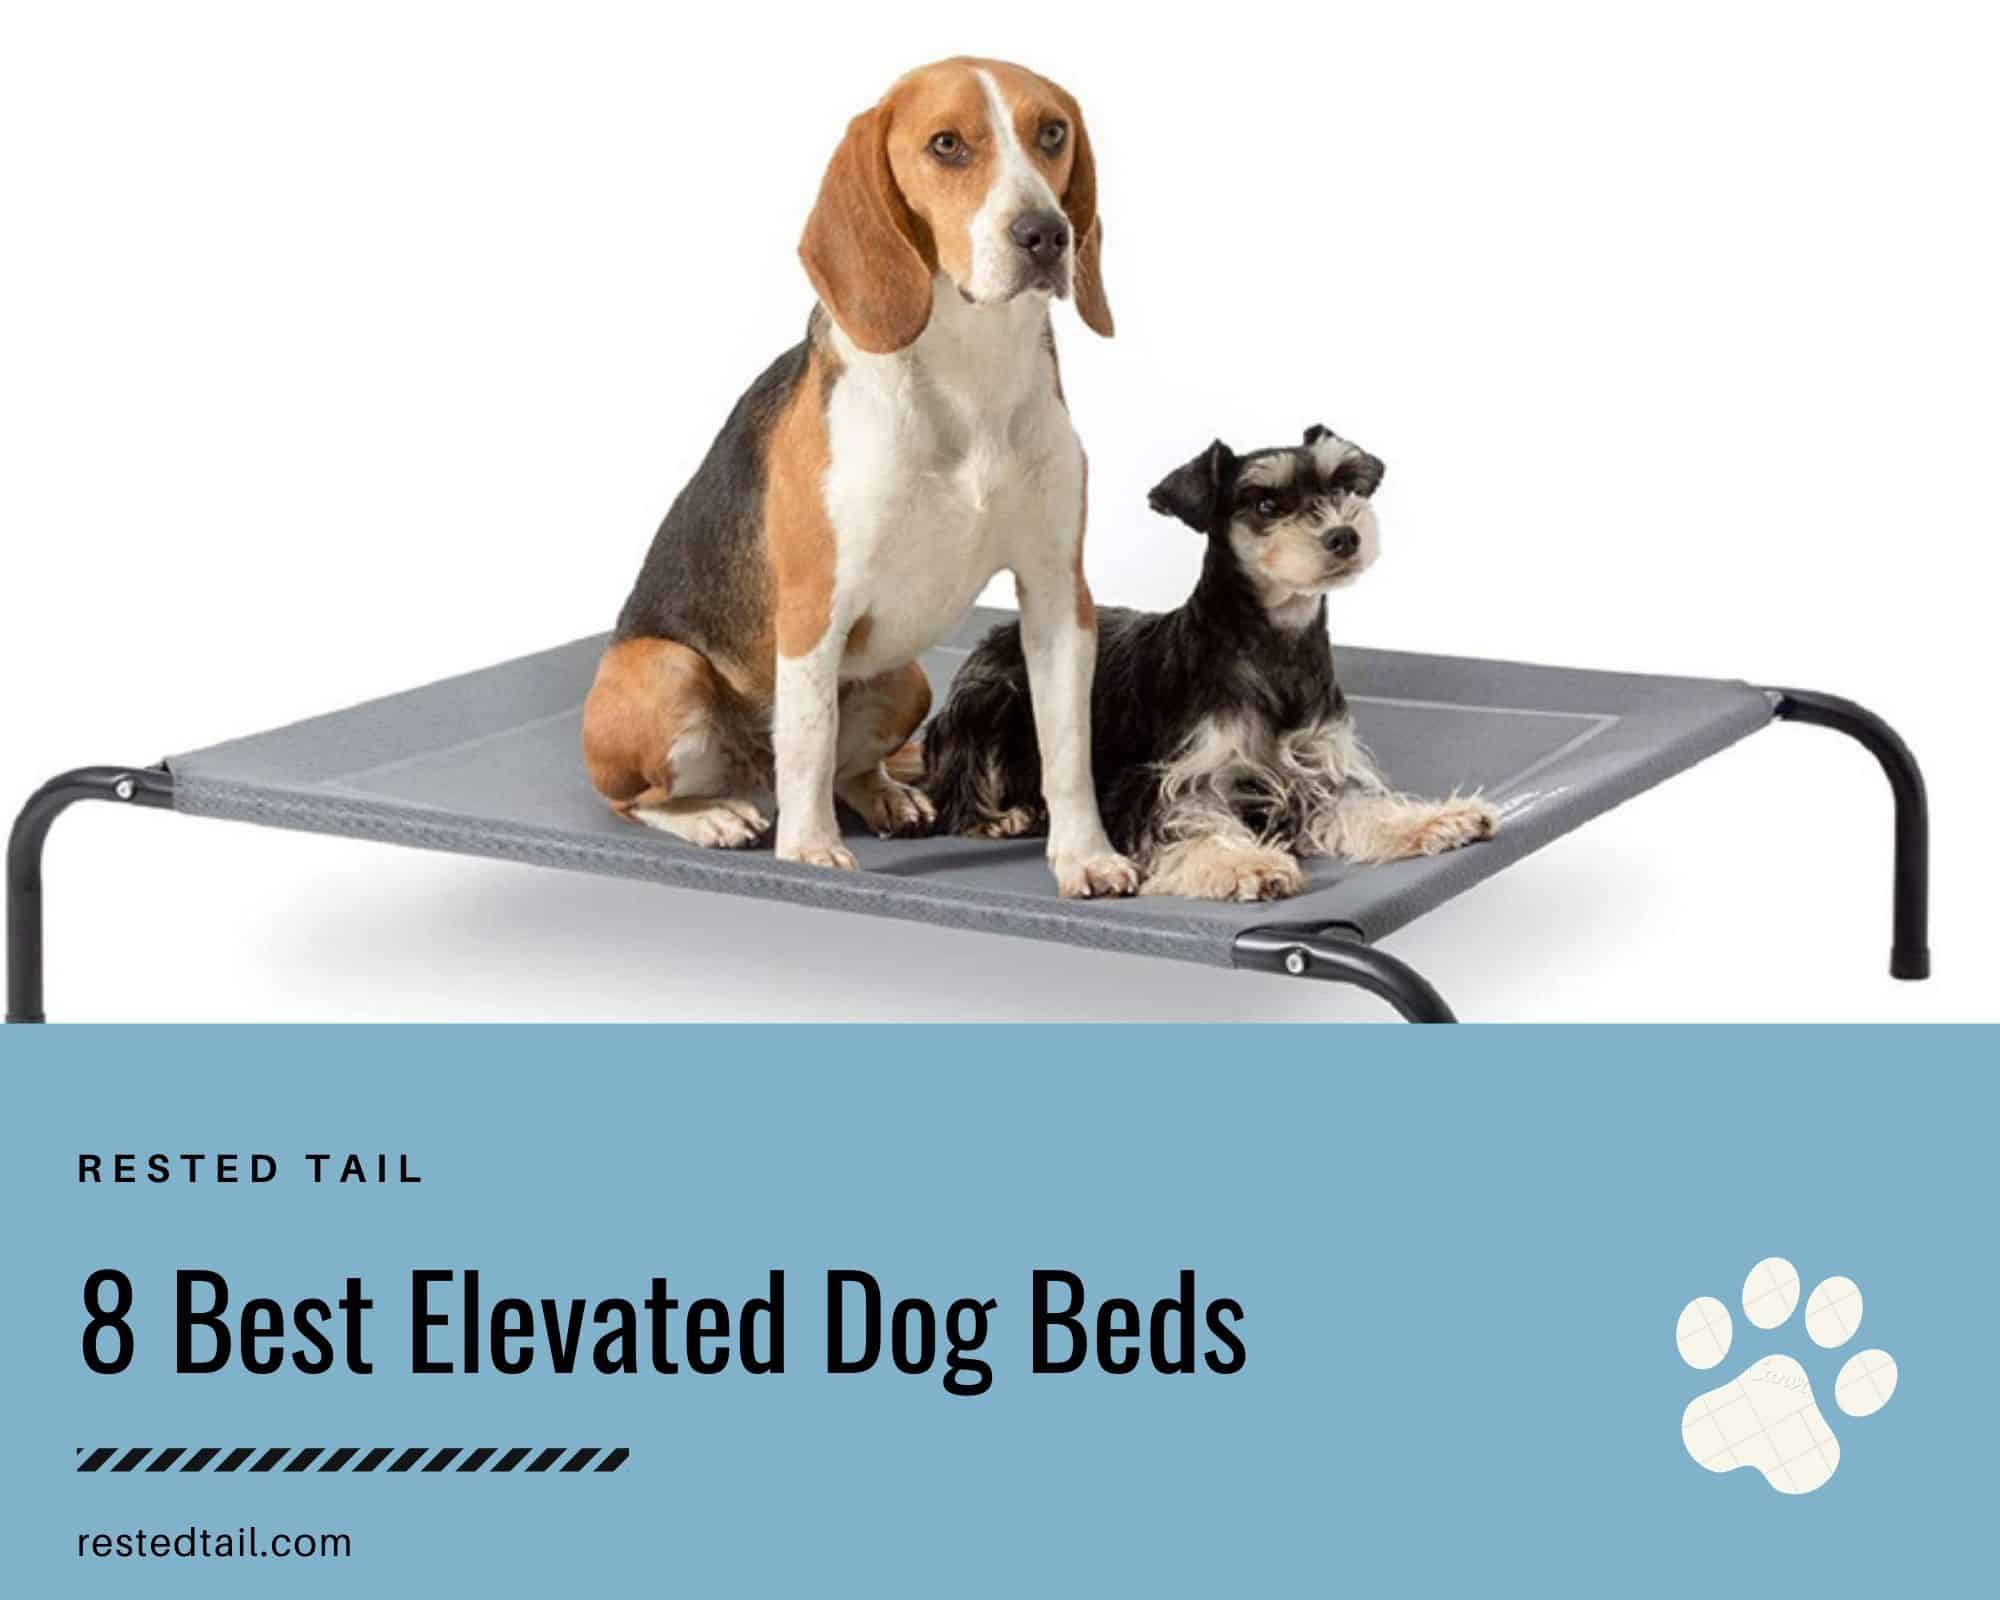 Elevated dog beds